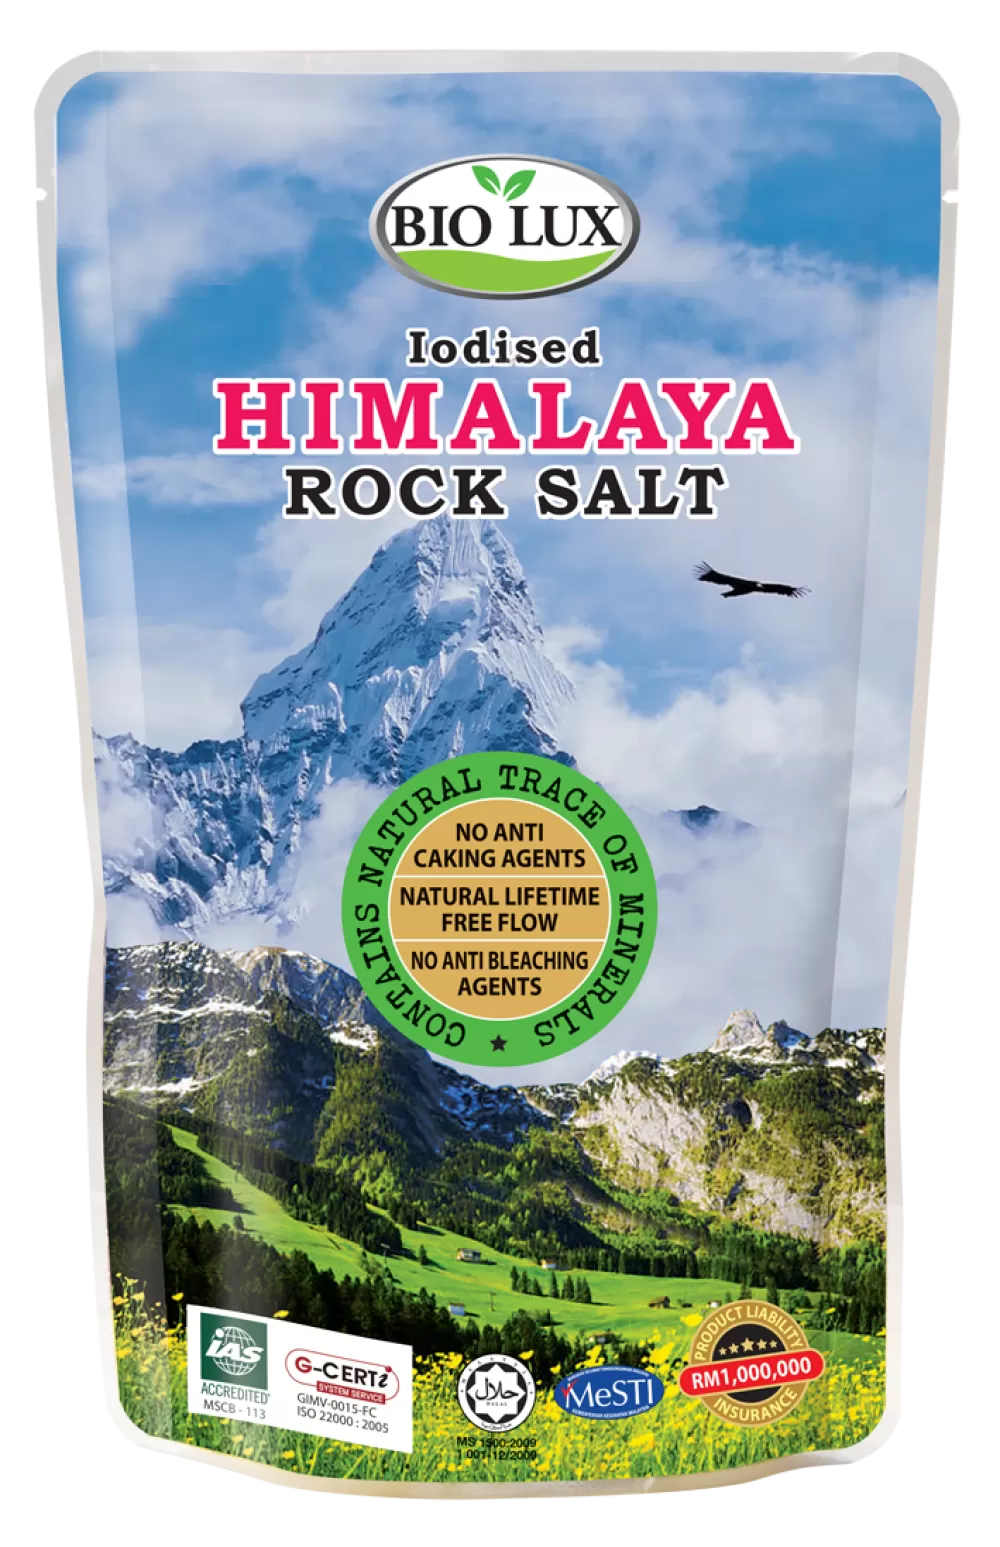 Biolux Iodised Himalaya Rock Salt 500g